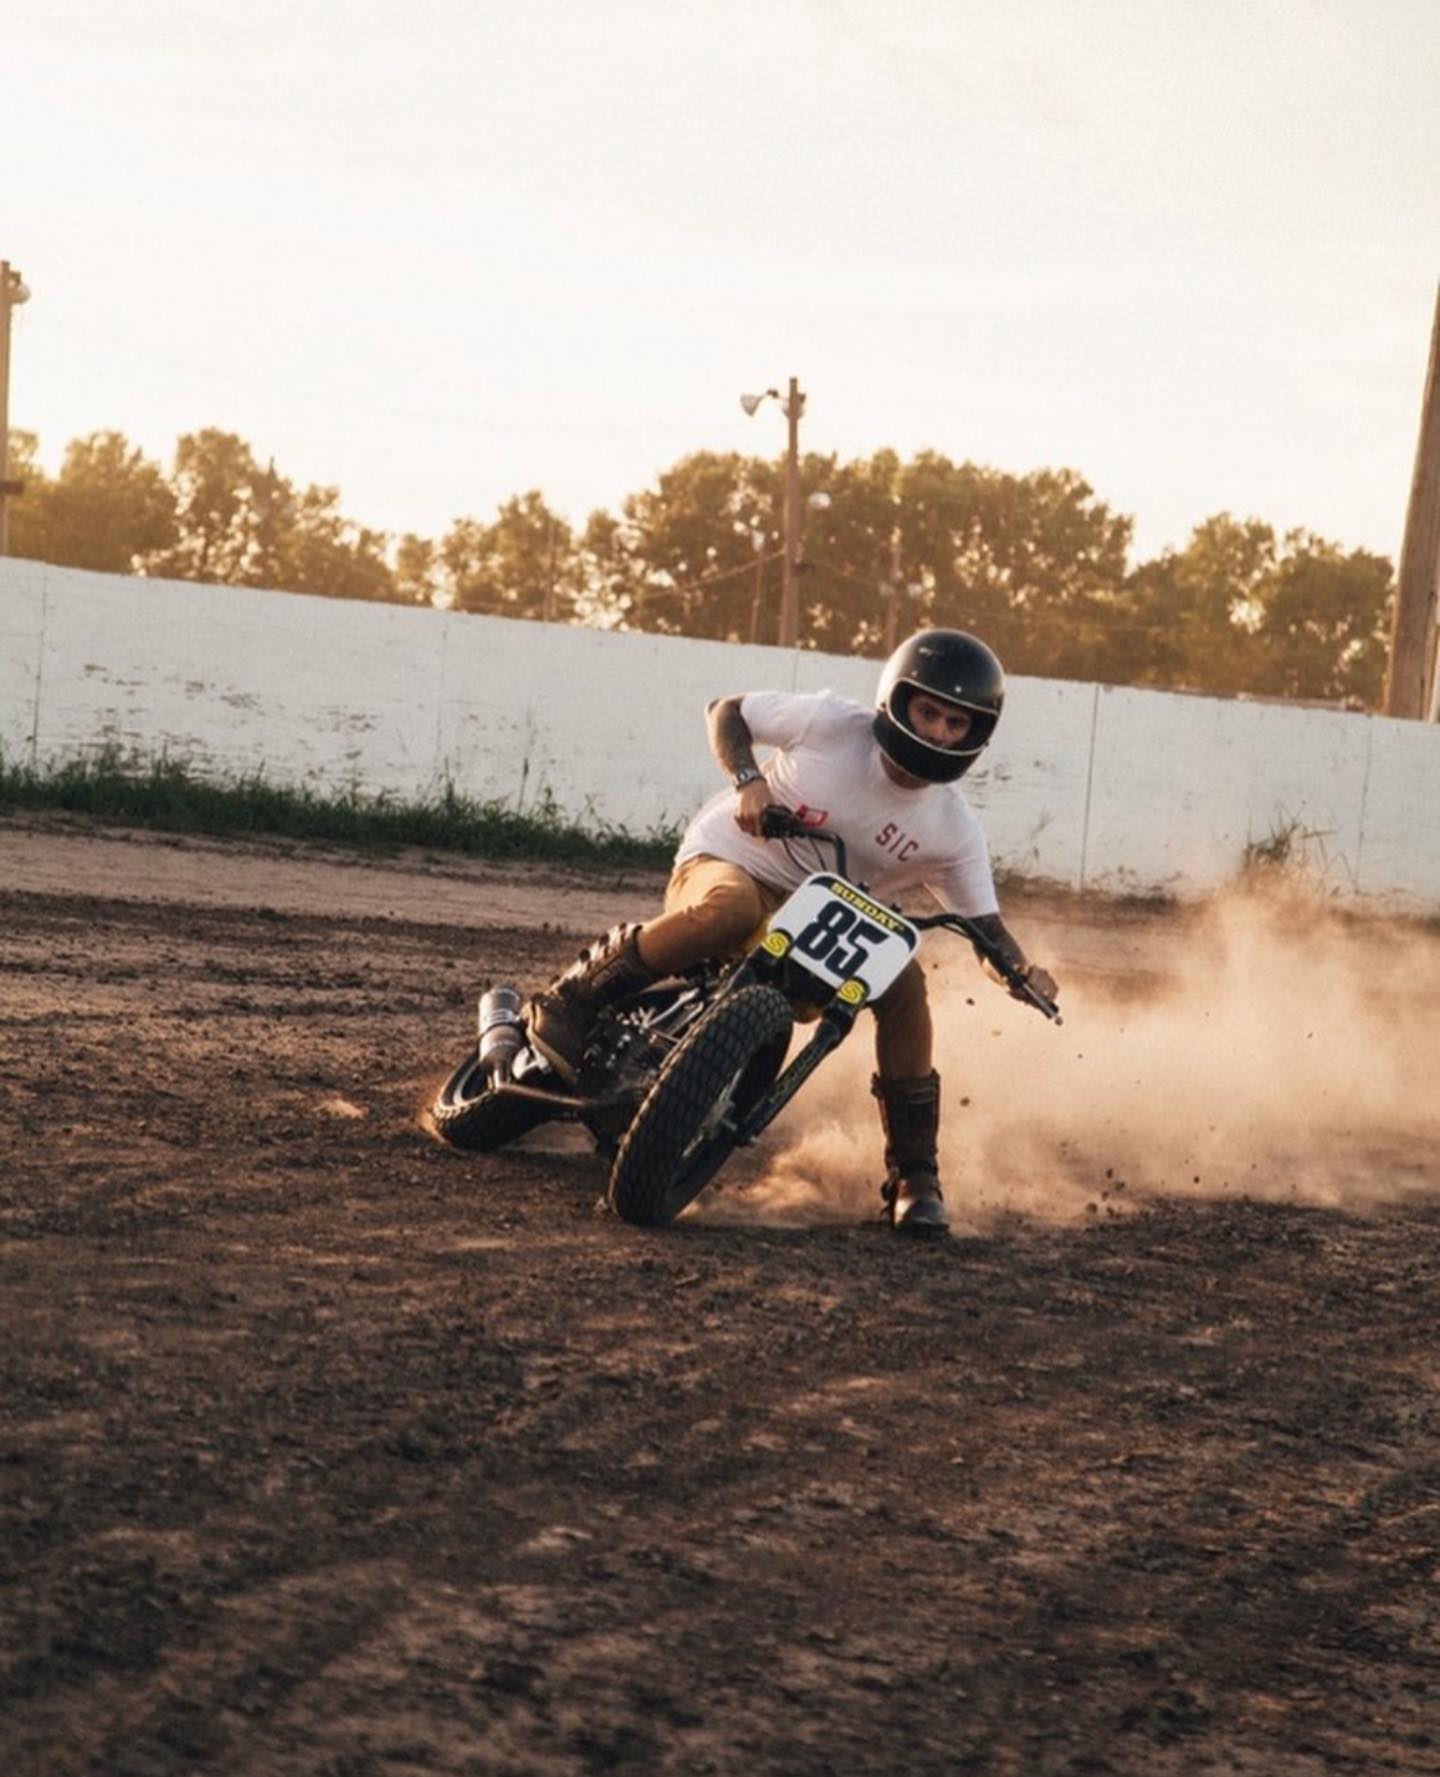 THROW🔙 🤩 @fastandleftfilm
@jkrubsack
—
#sundaymotors #flattrack #moto #ycf #motorcycle